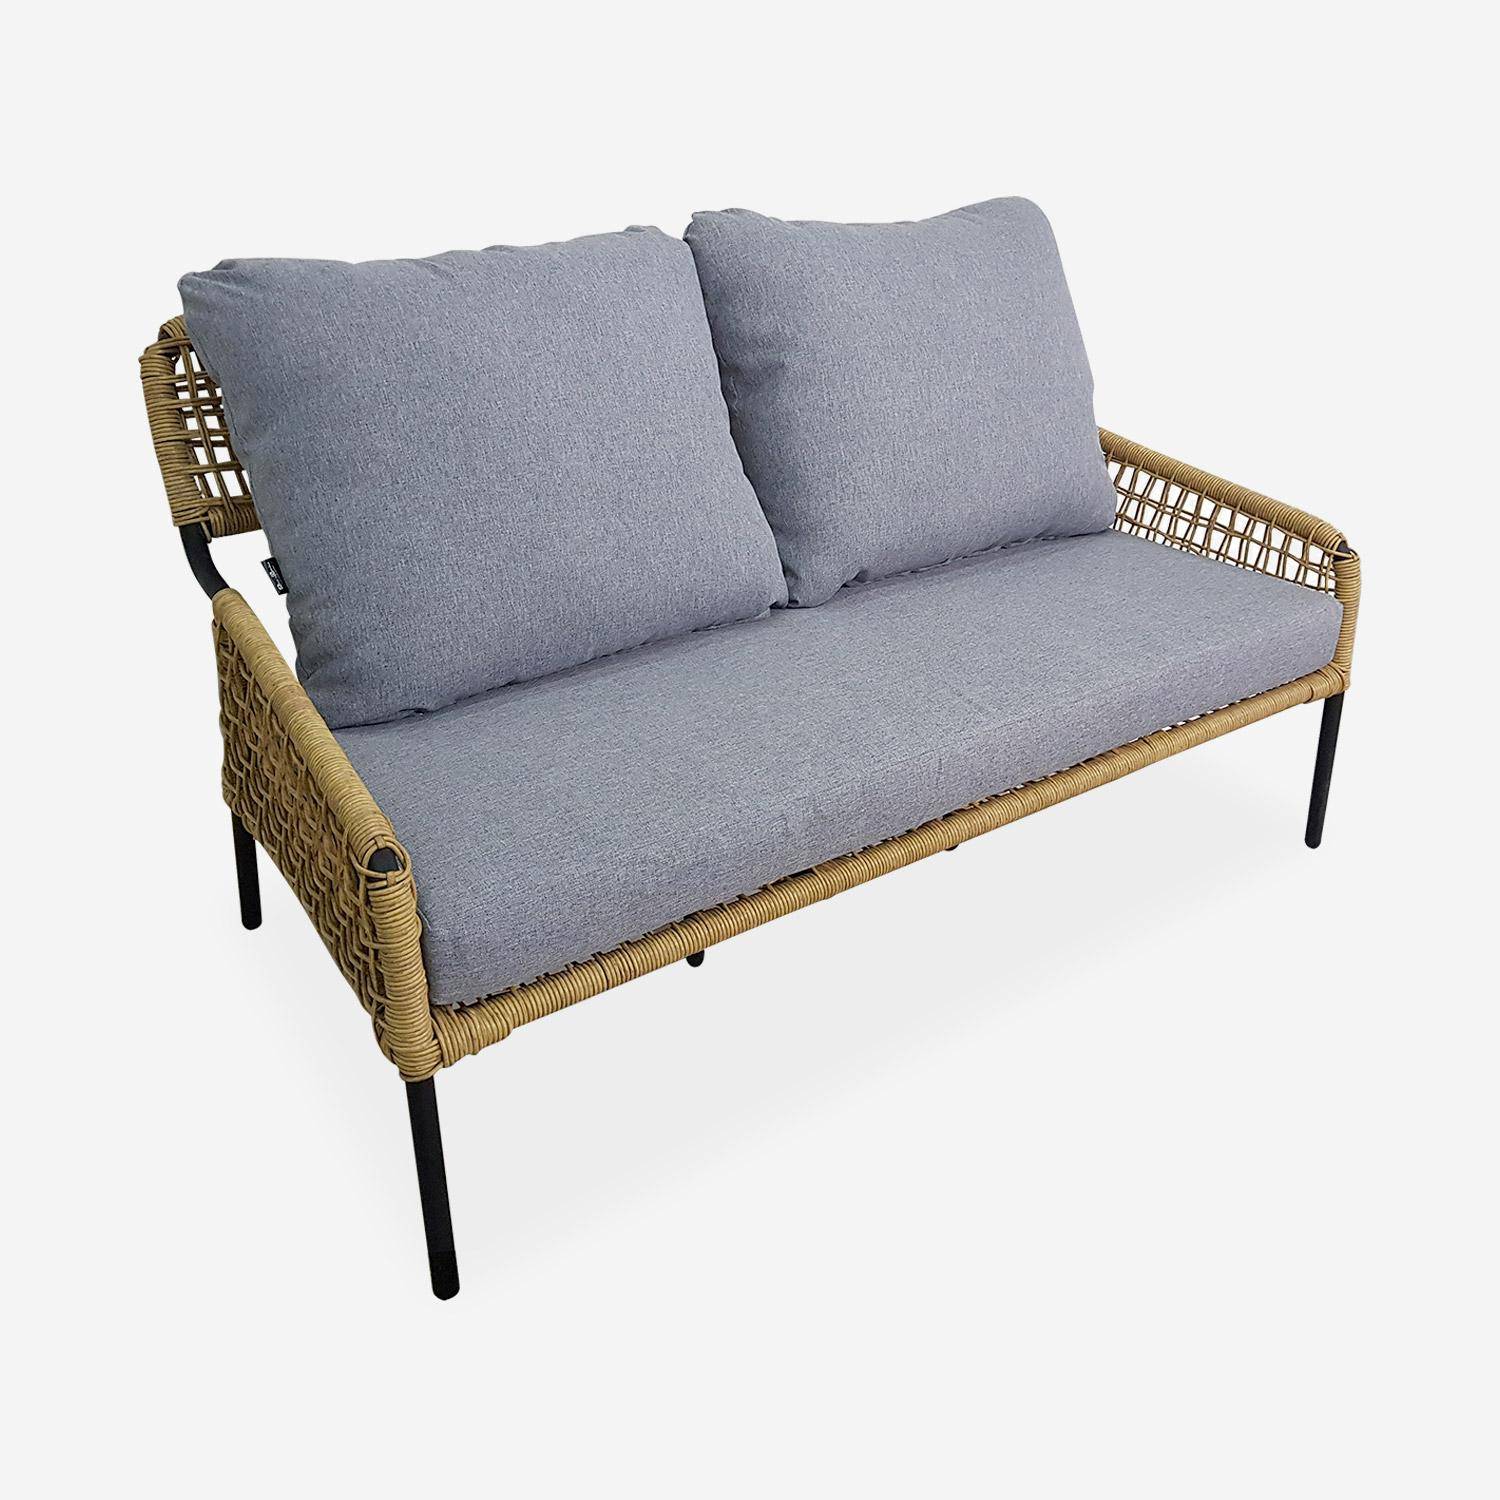 4-seater bamboo-effect rattan garden sofa set - Komodo - Natural, Grey,sweeek,Photo2